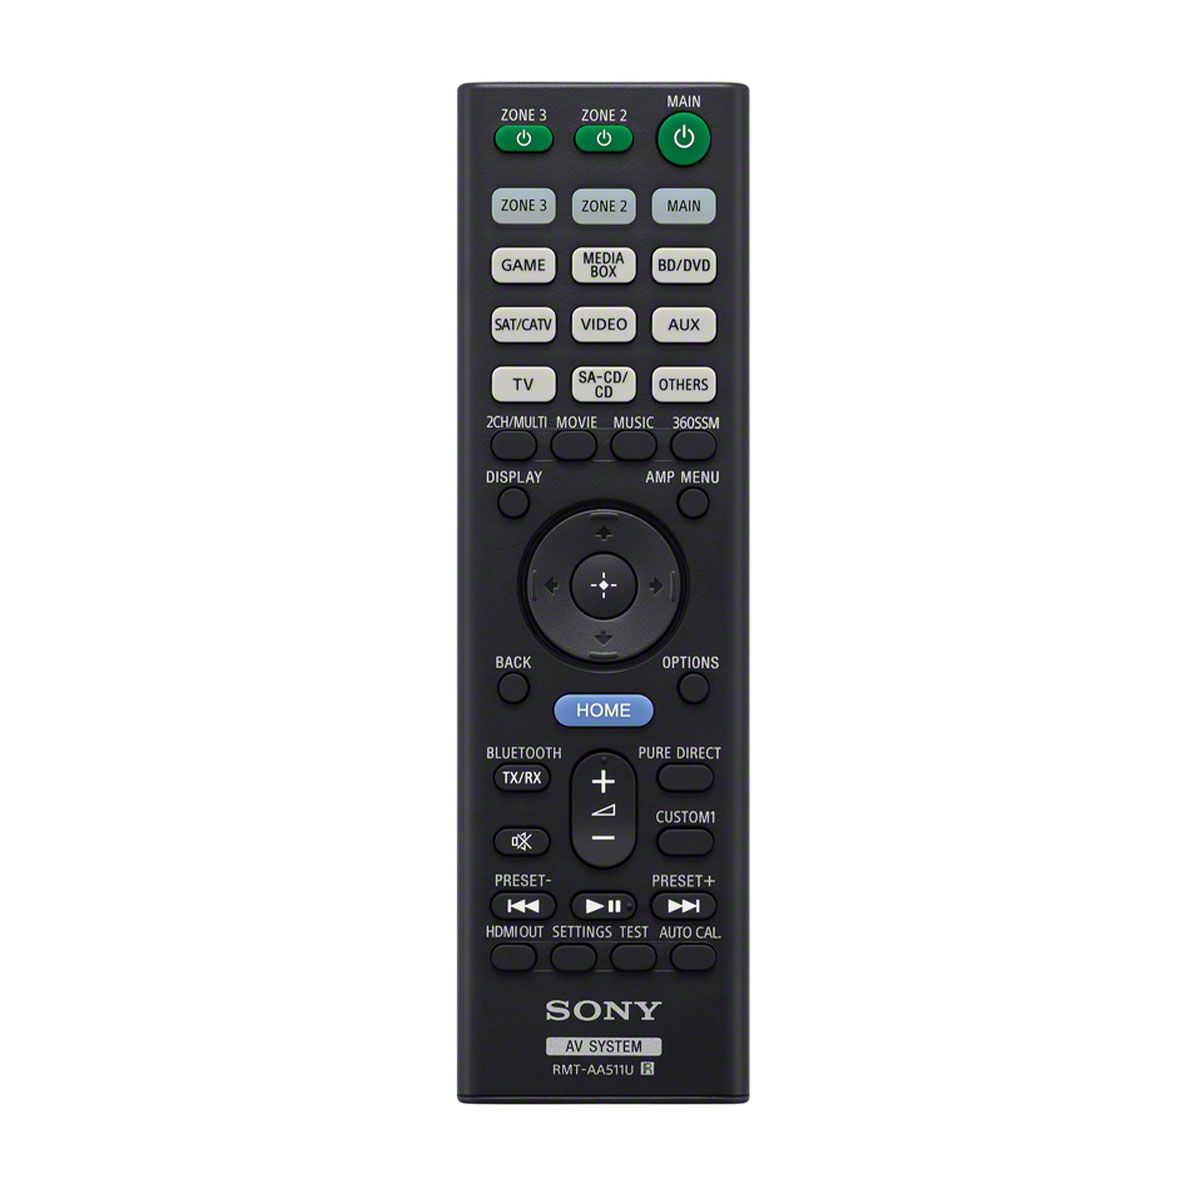 Sony STR-AZ3000ES Home Theater Receiver - remote